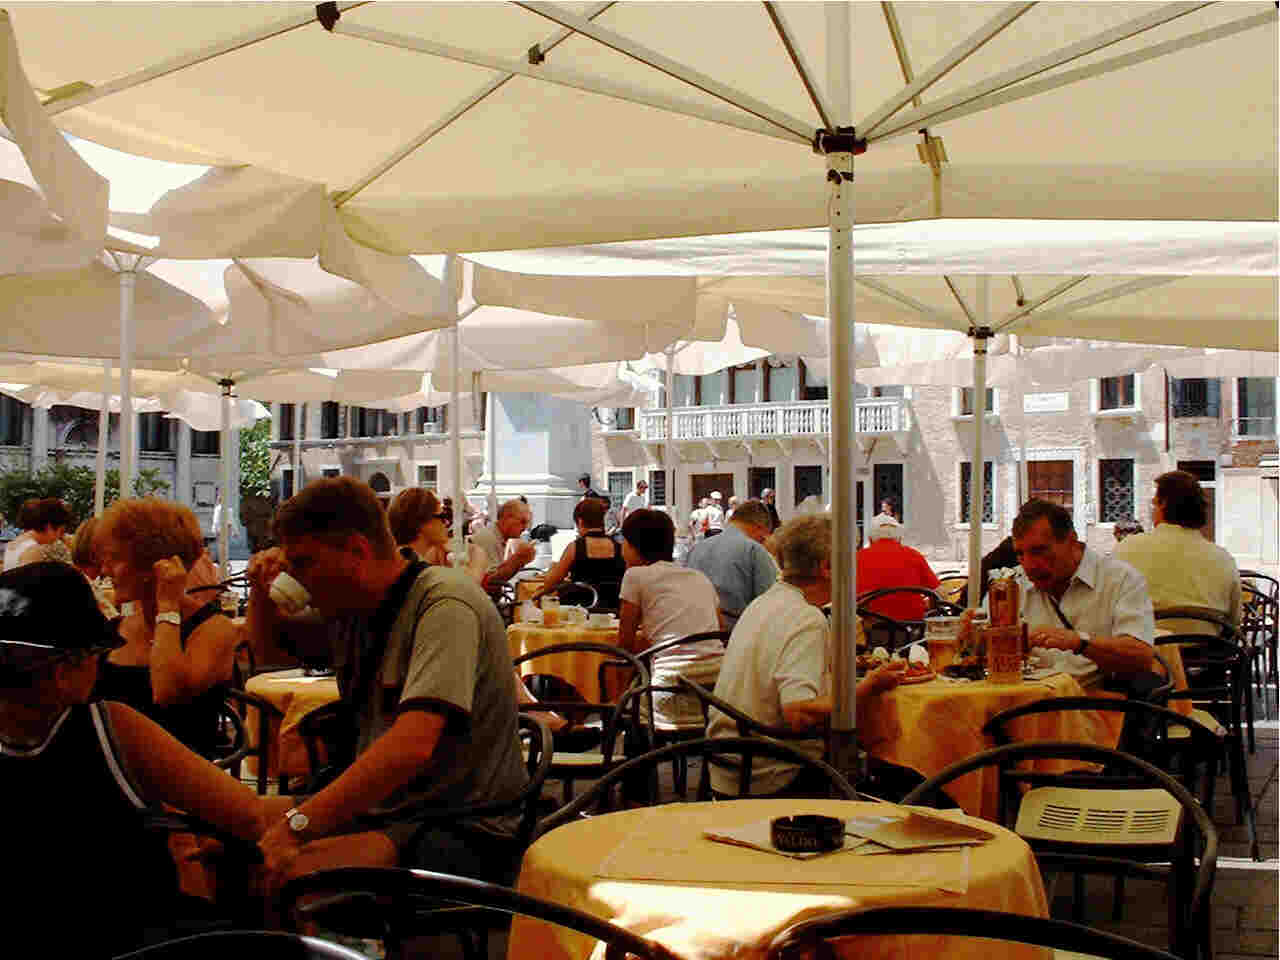 Le Cafe in Venice